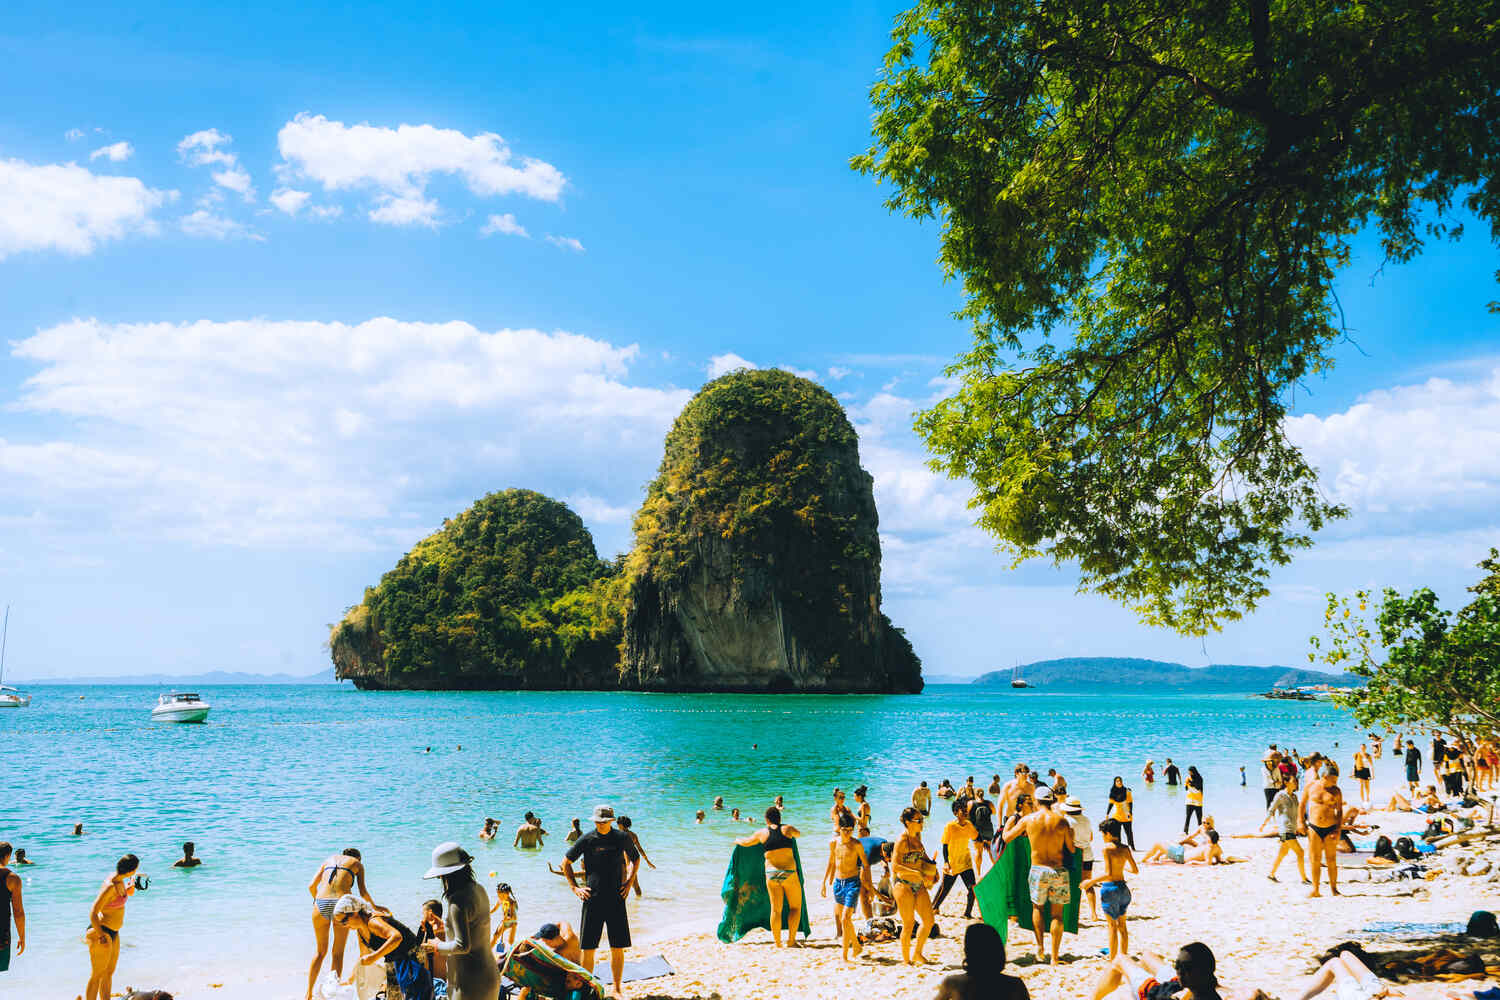 Tourist-crowds-in-Railay-Beach-Krabi-Thailand in January